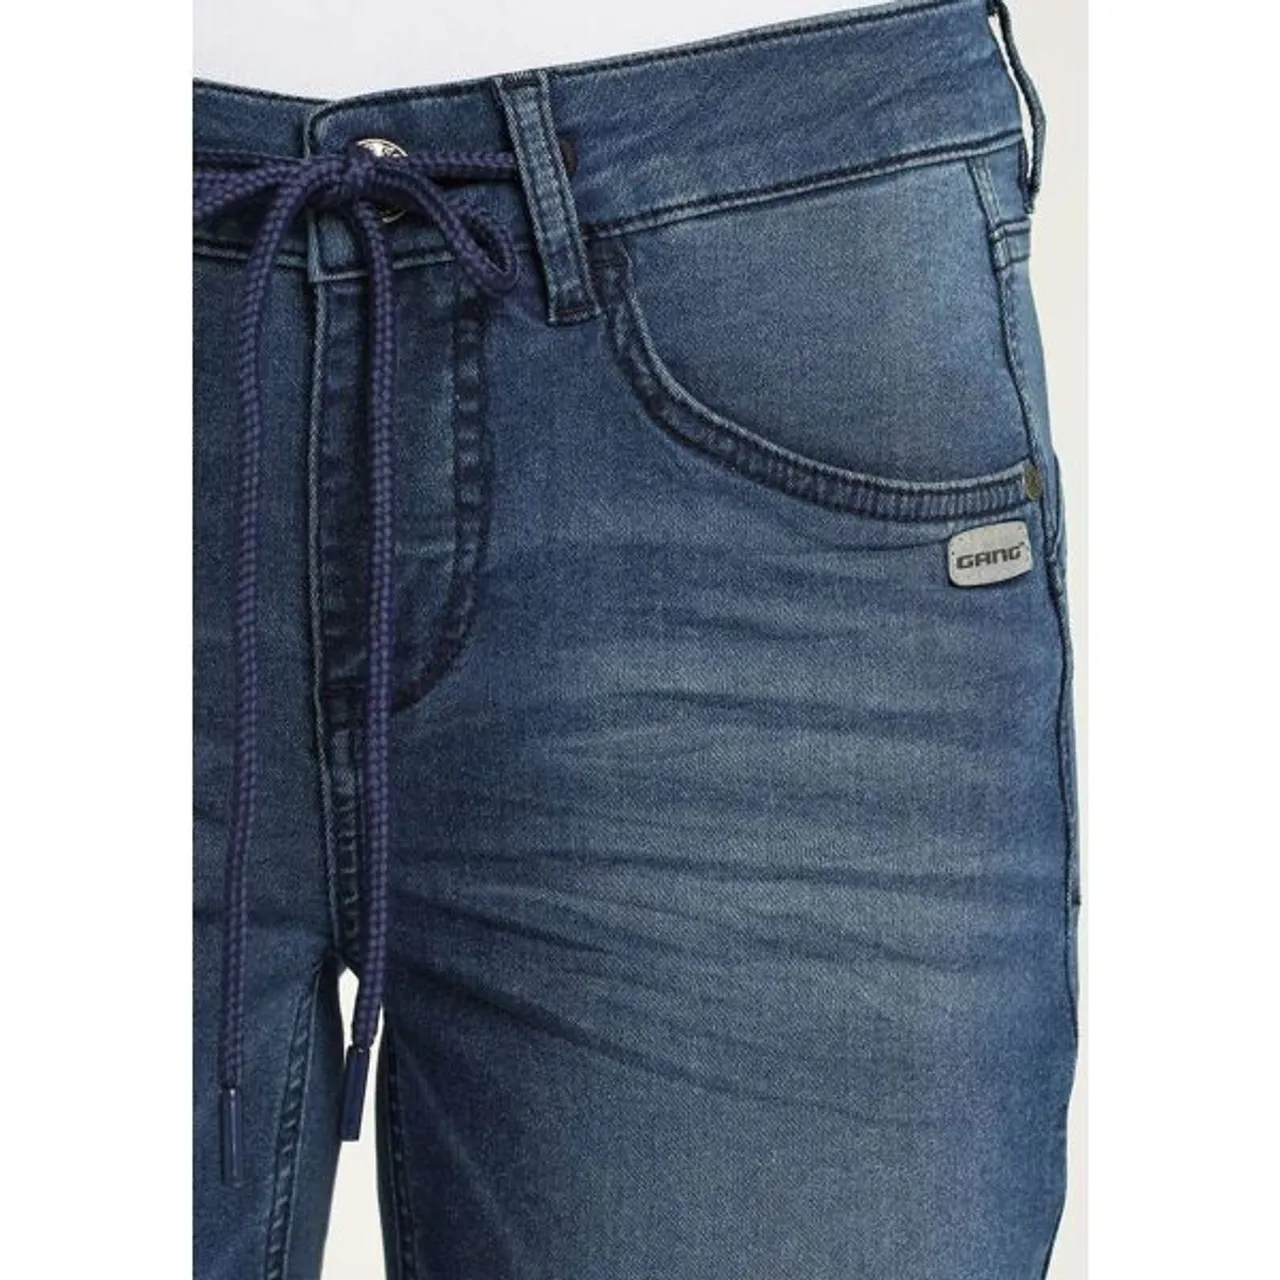 Jogg Pants GANG "94JOLINE JOGG" Gr. 30, N-Gr, blau (midblue stone) Damen Jeans Joggpants Track Pants mit passenden Bindeband